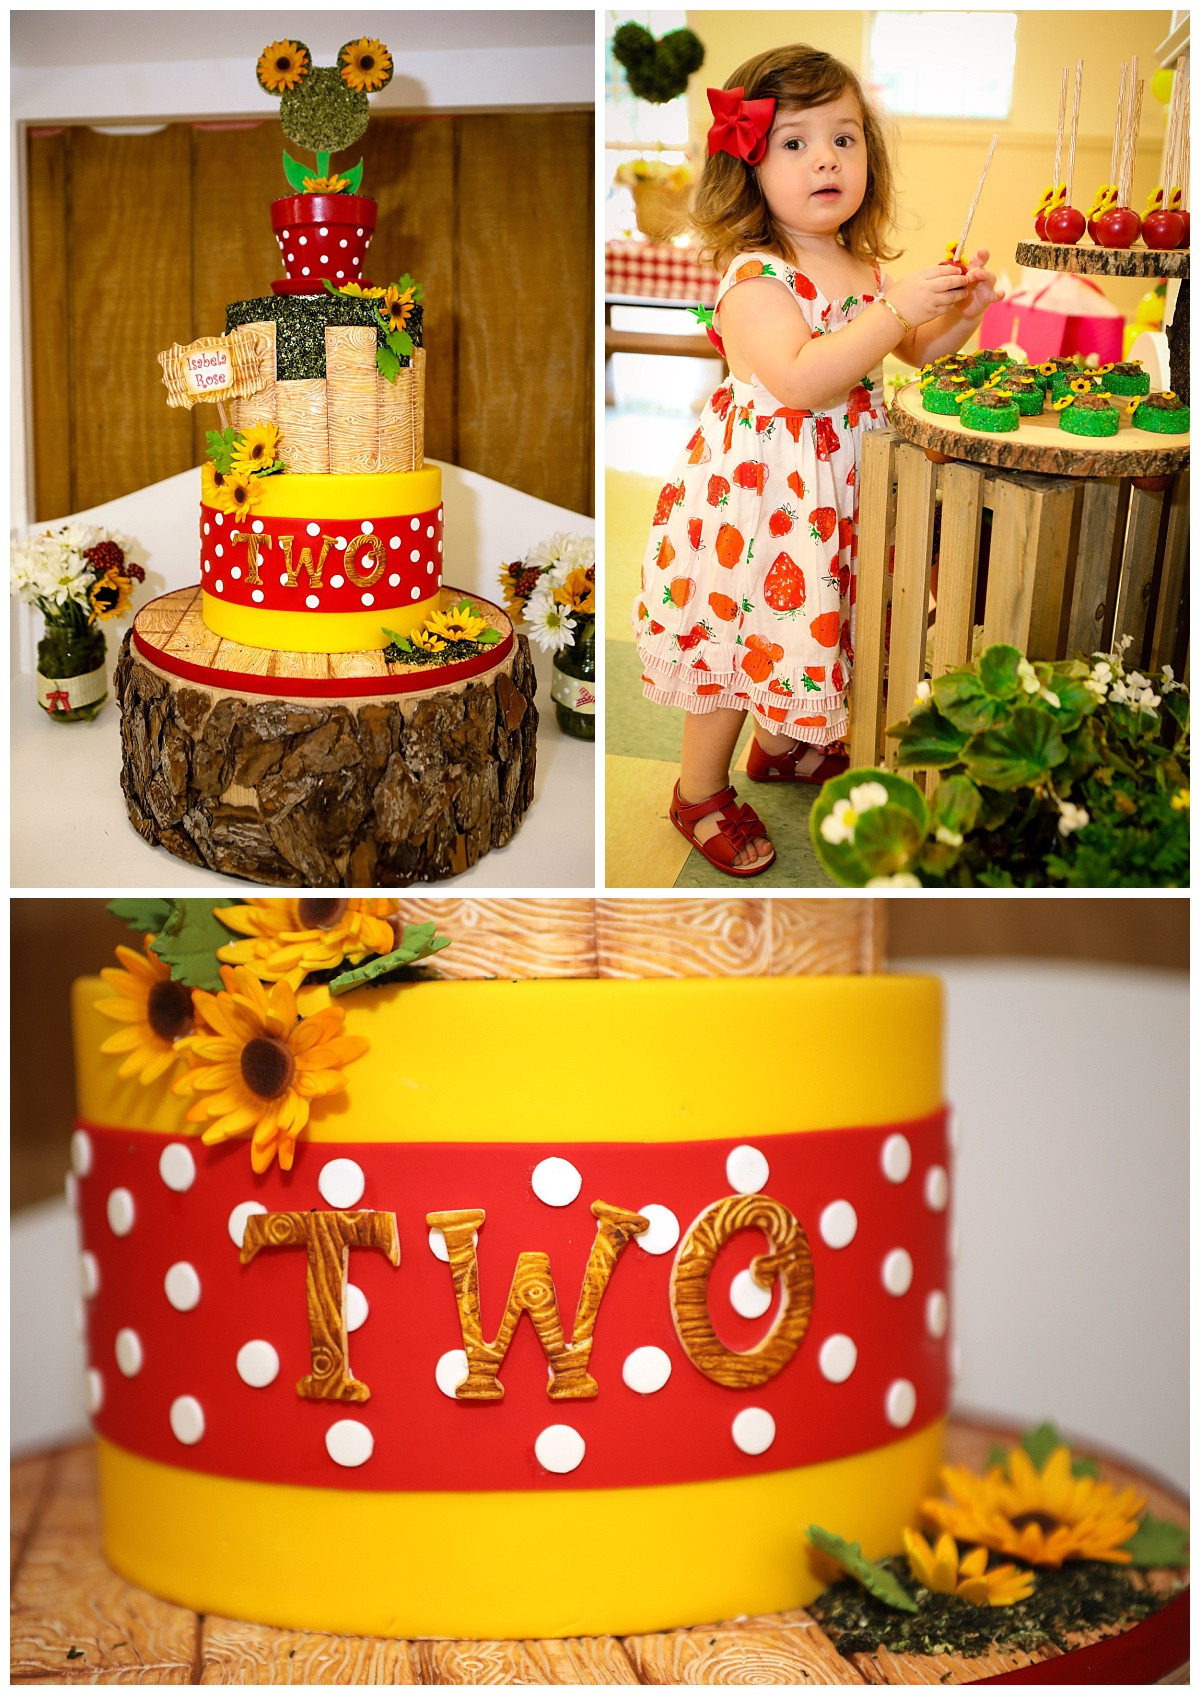 Personalized Birthday Cakes
 Isabela s 2nd Birthday Cake